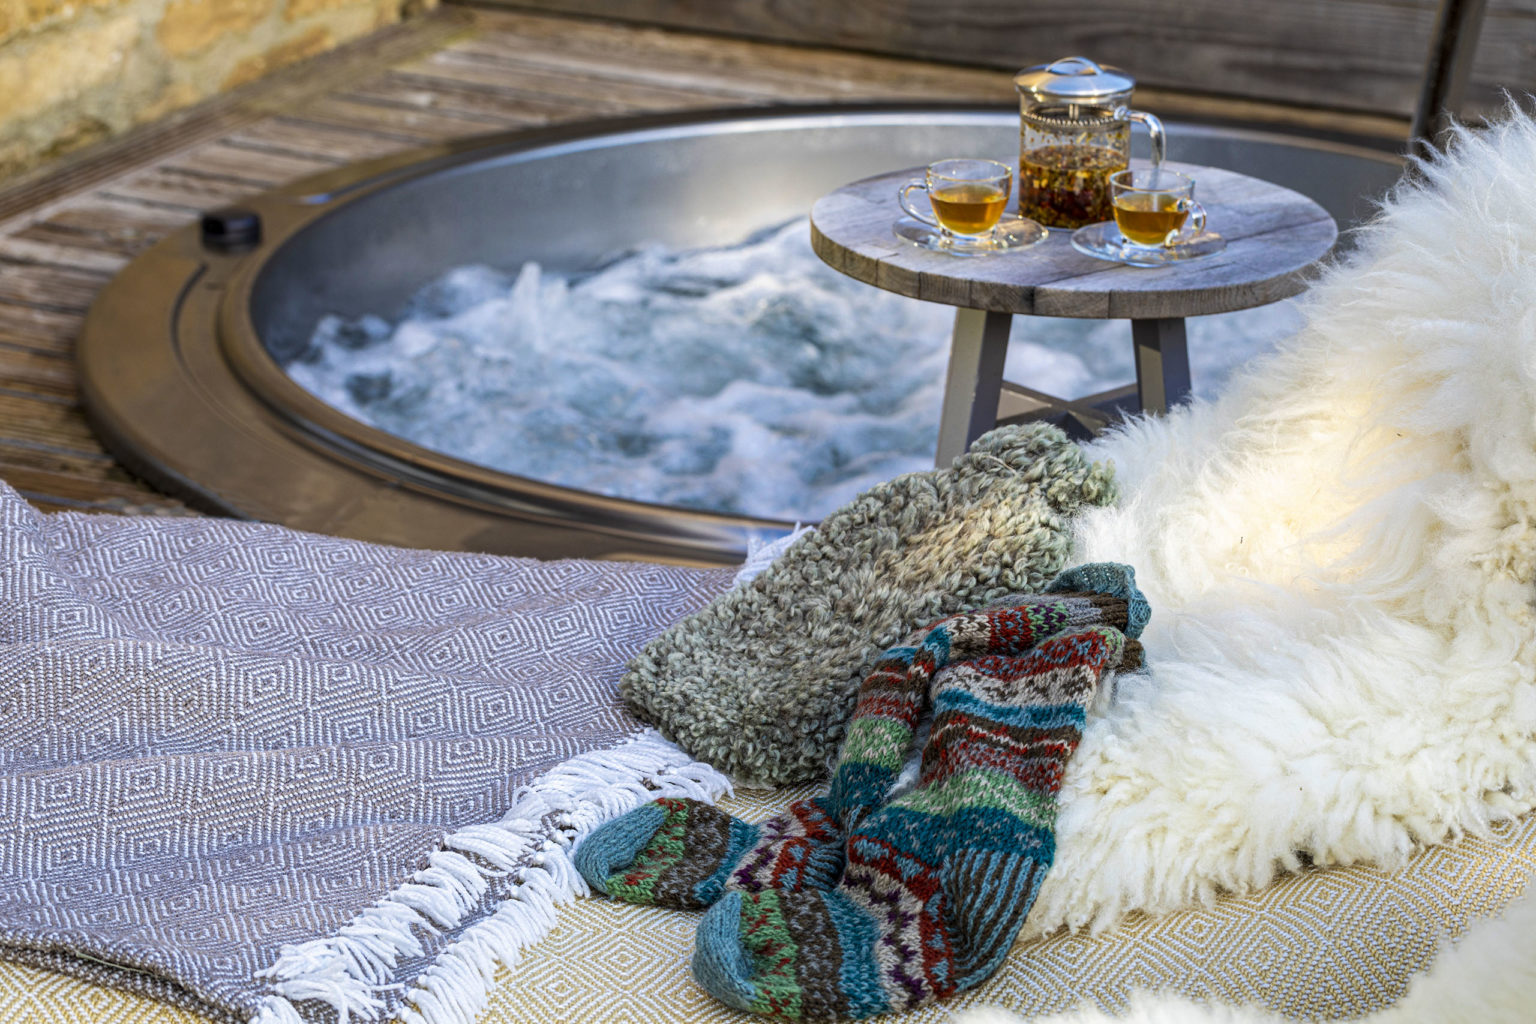 A hot tub, herbal tea and blankets